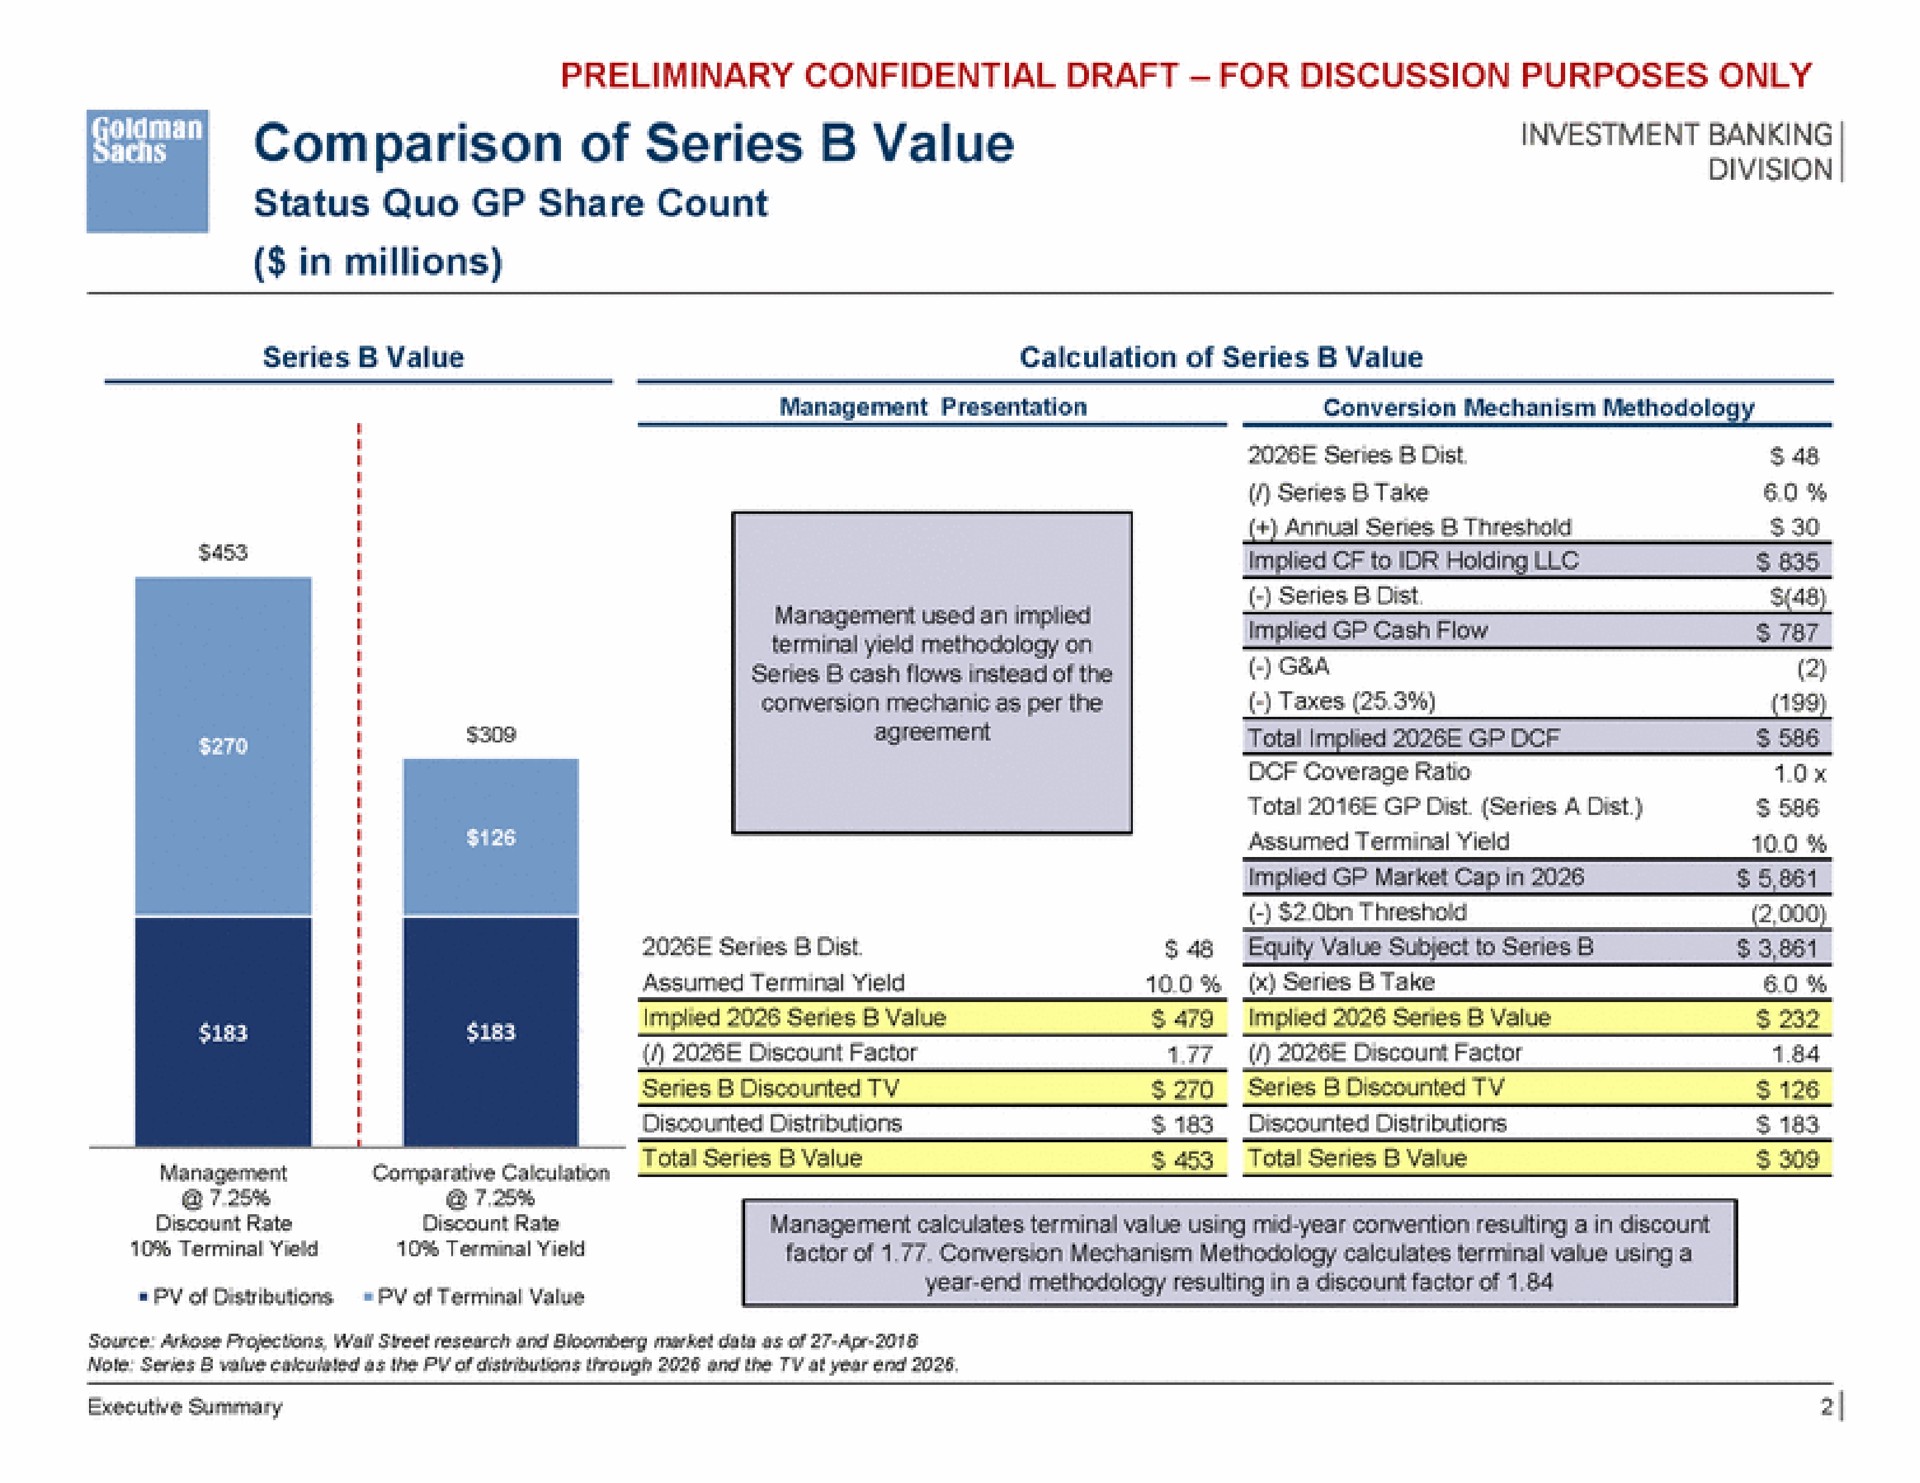 comparison of series value in millions | Goldman Sachs